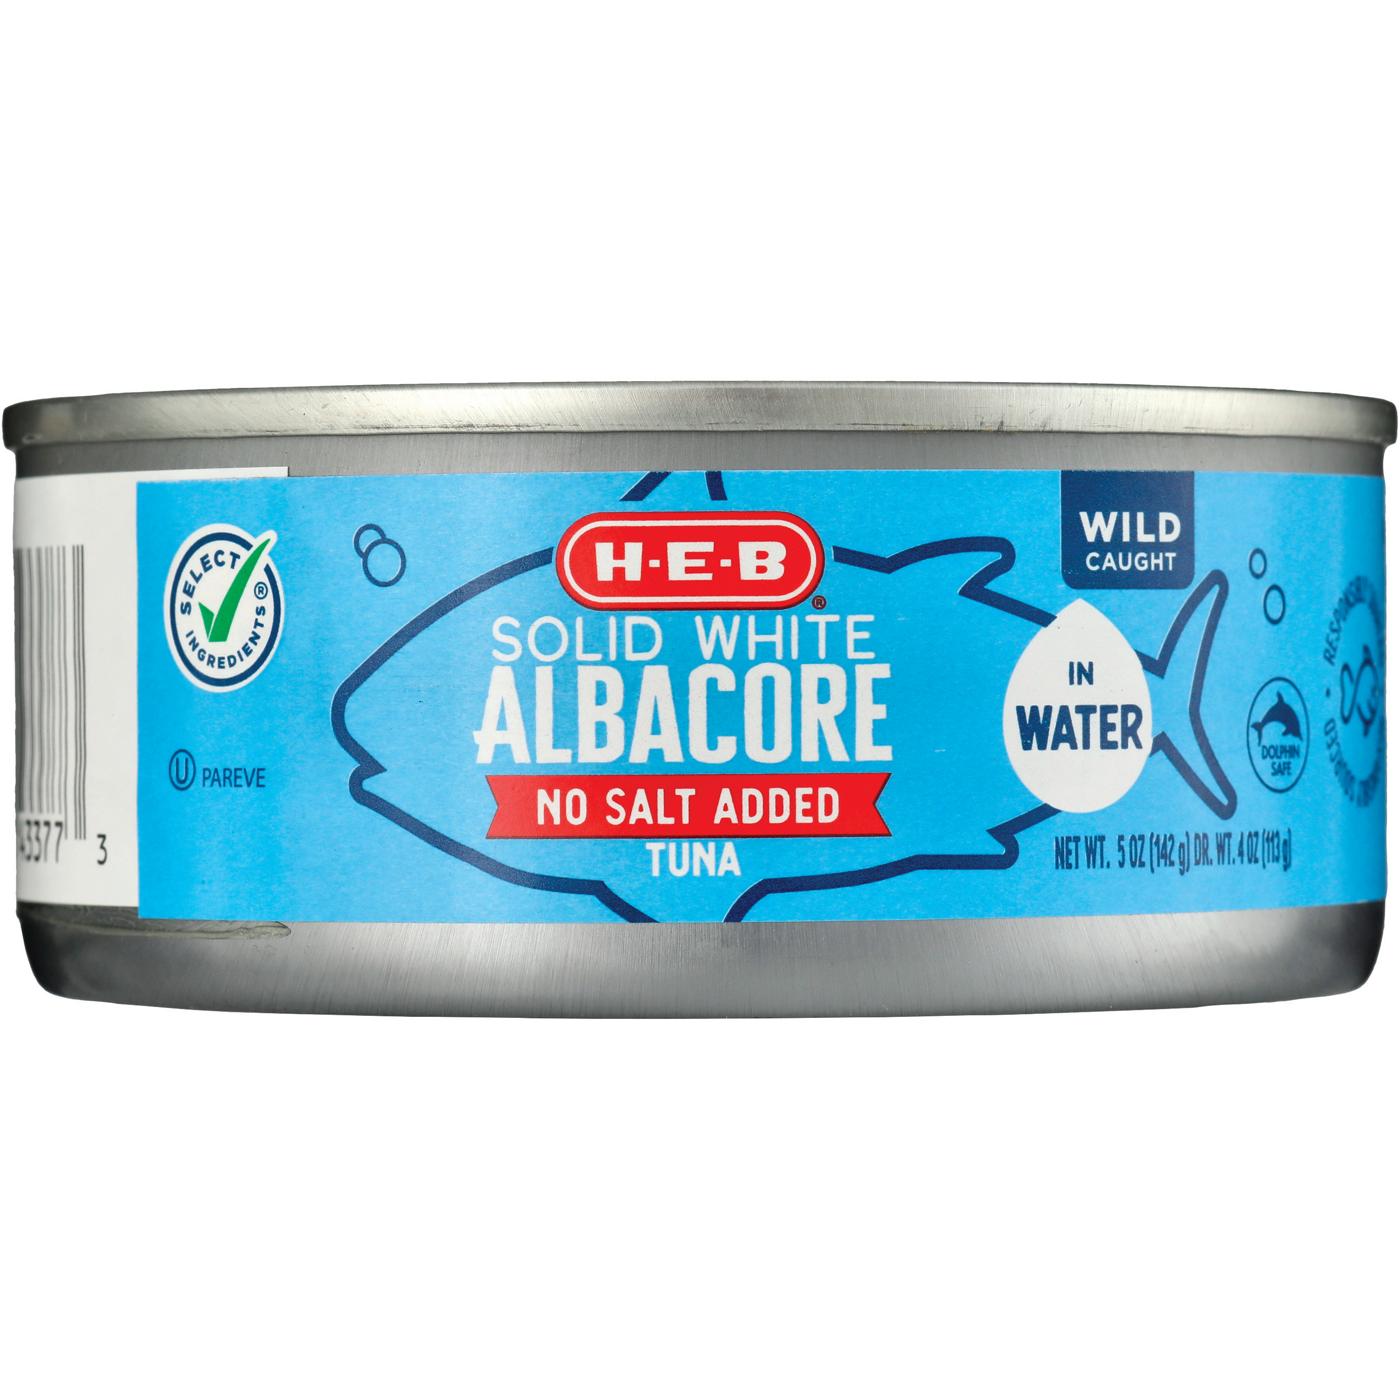 H-E-B Solid White Albacore Tuna - No Salt Added; image 2 of 2